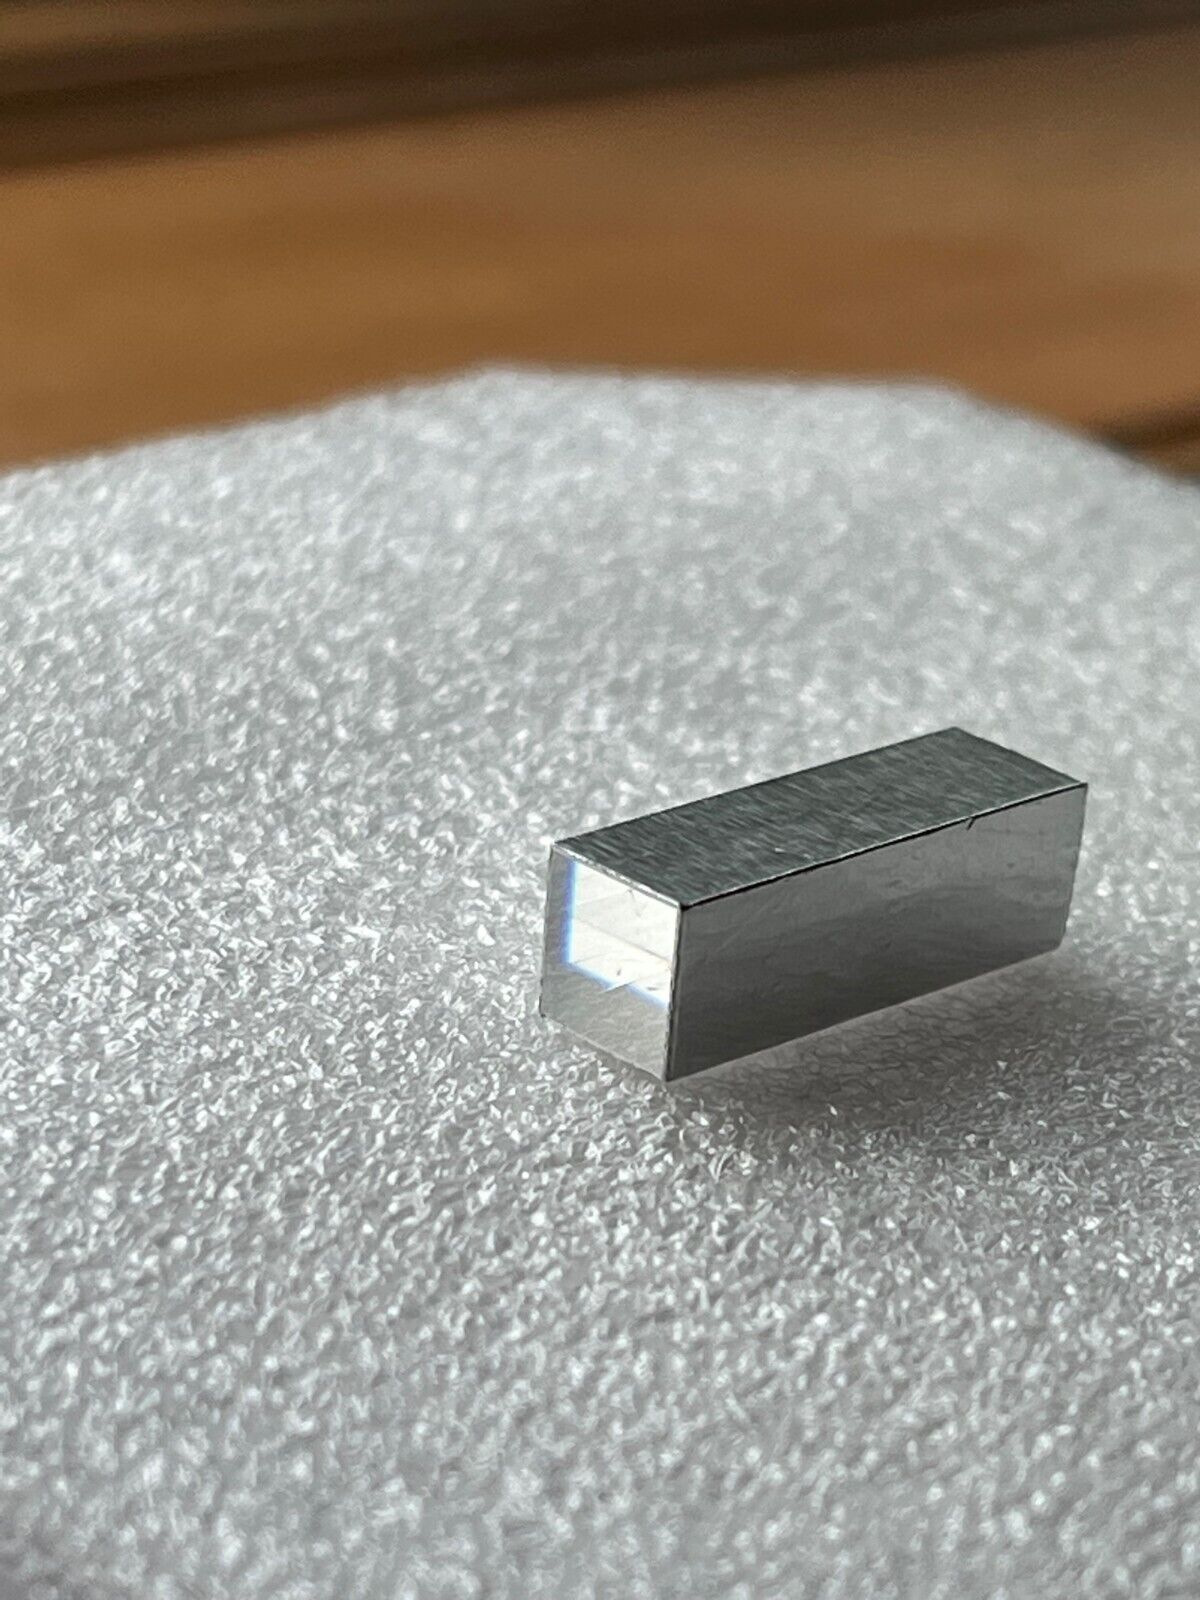 BGO Scintillator Crystal for Radiation Scintillation Detector SiPM BaSO4 coating